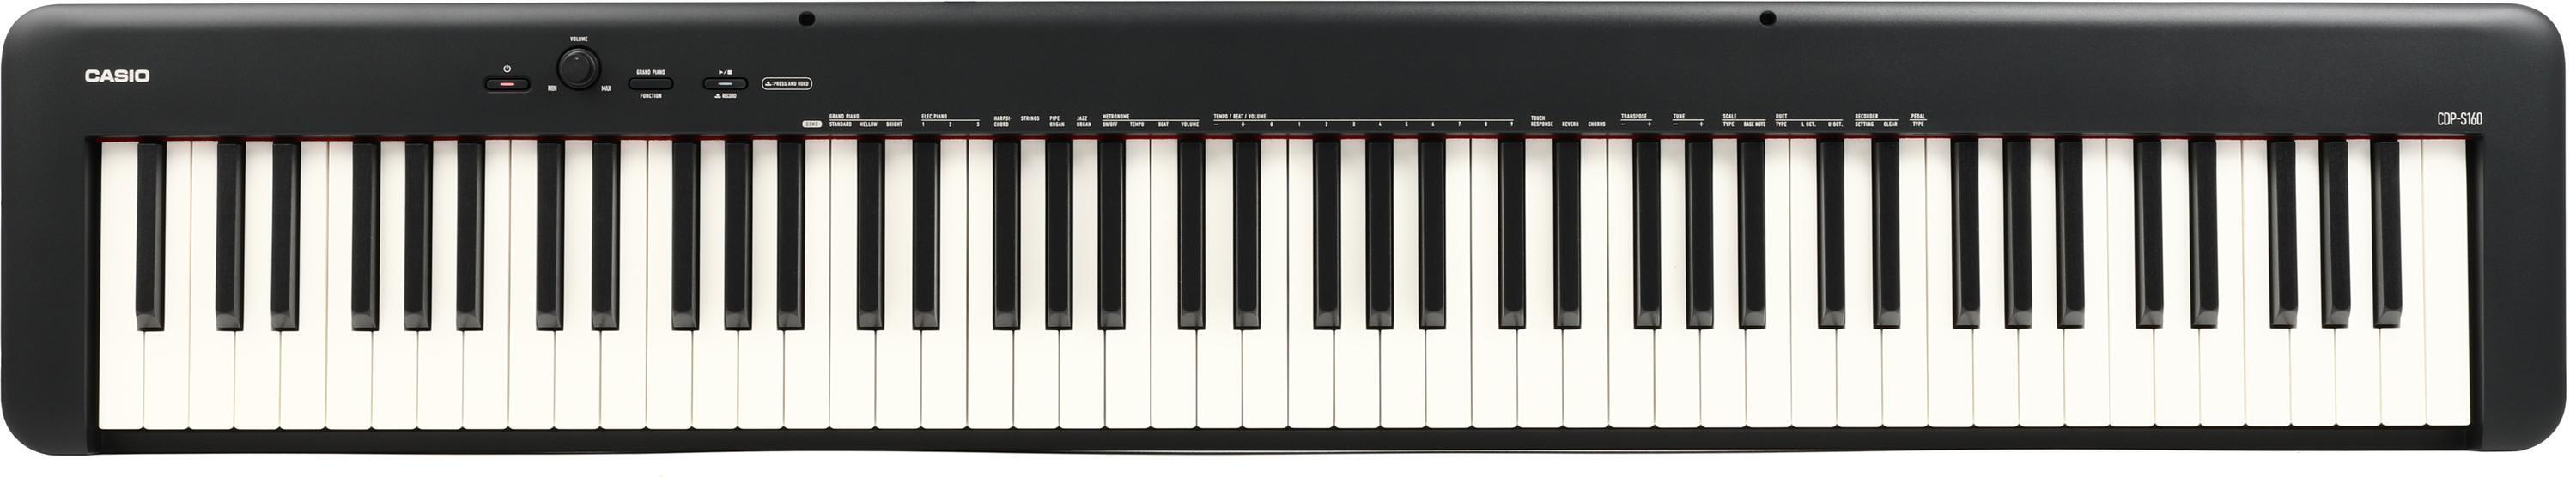 Piano Digital Casio CDPS160 Vermelho Kit Completo - Super Sonora!